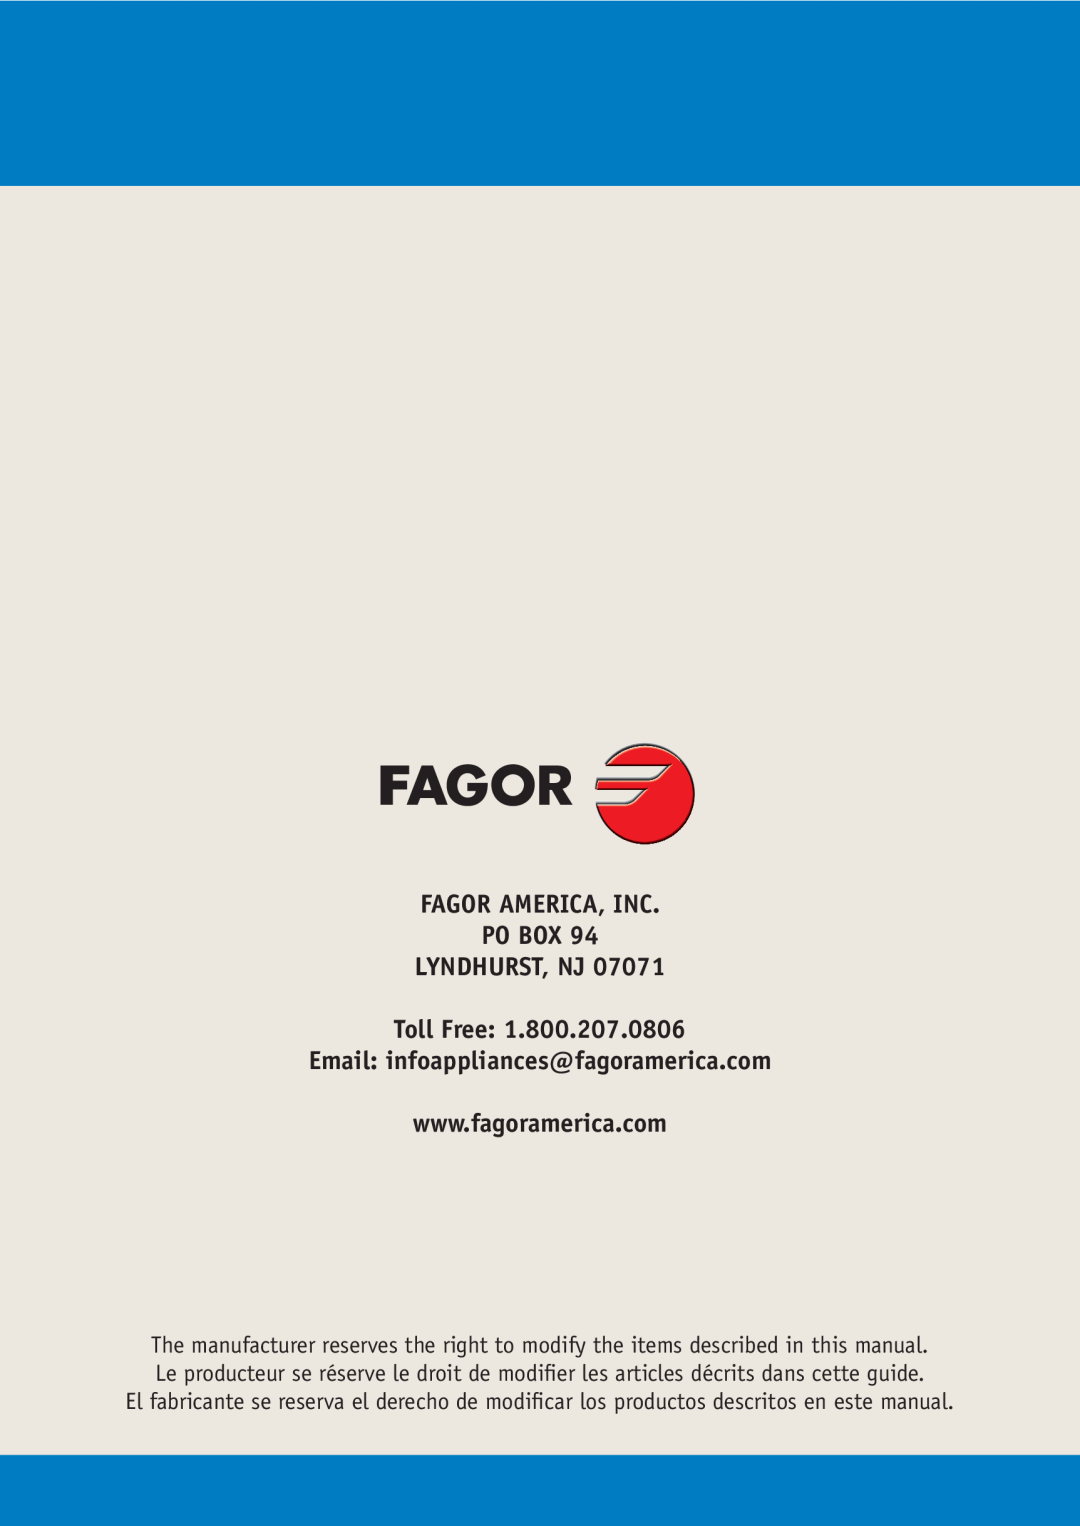 Fagor America VFA-78 S manual Fagor America, Inc Po Box Lyndhurst, Nj, Toll Free: Email: infoappliances@fagoramerica.com 